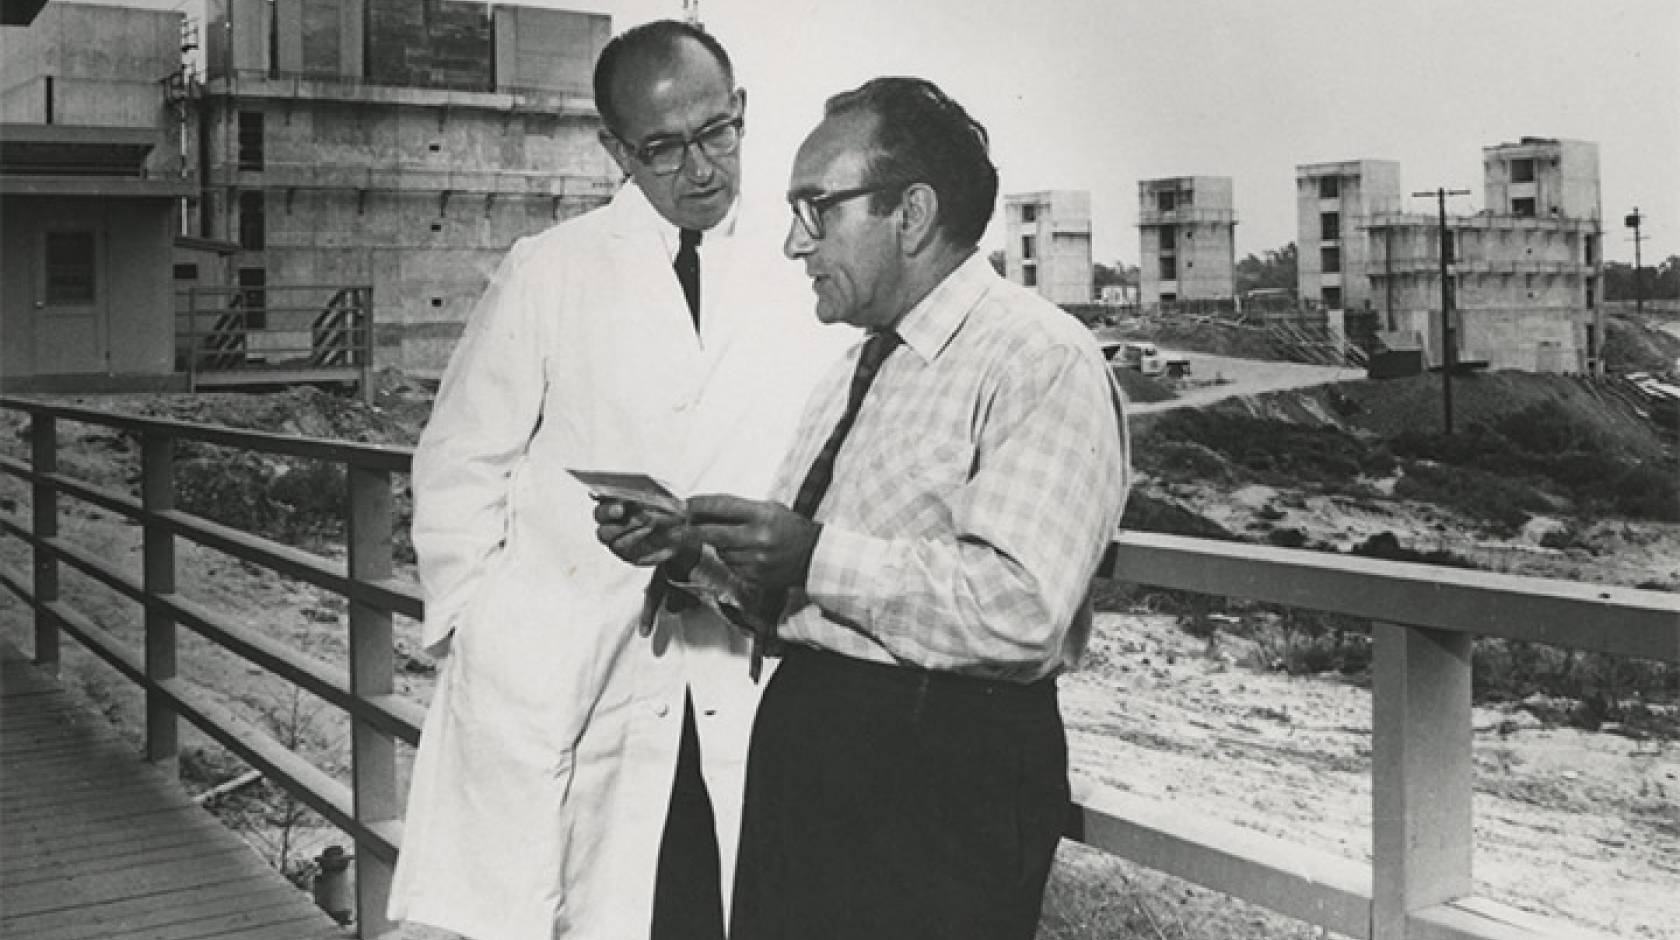 Jonas Salk Institute Laboratory, San Diego